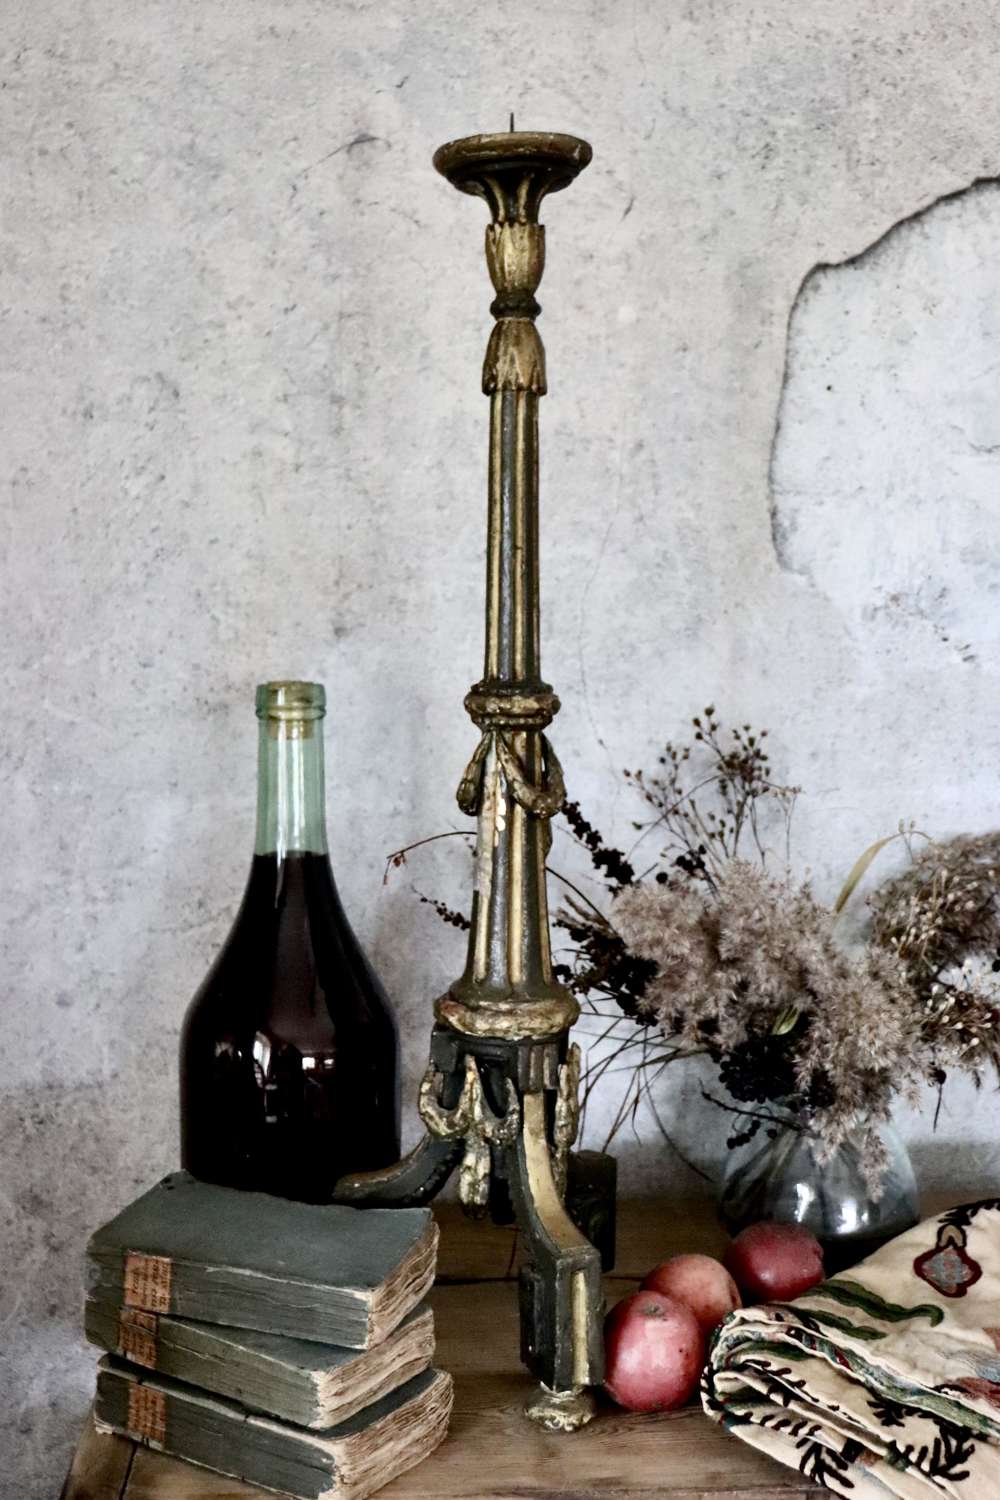 18th century Italian pricket or altar stick